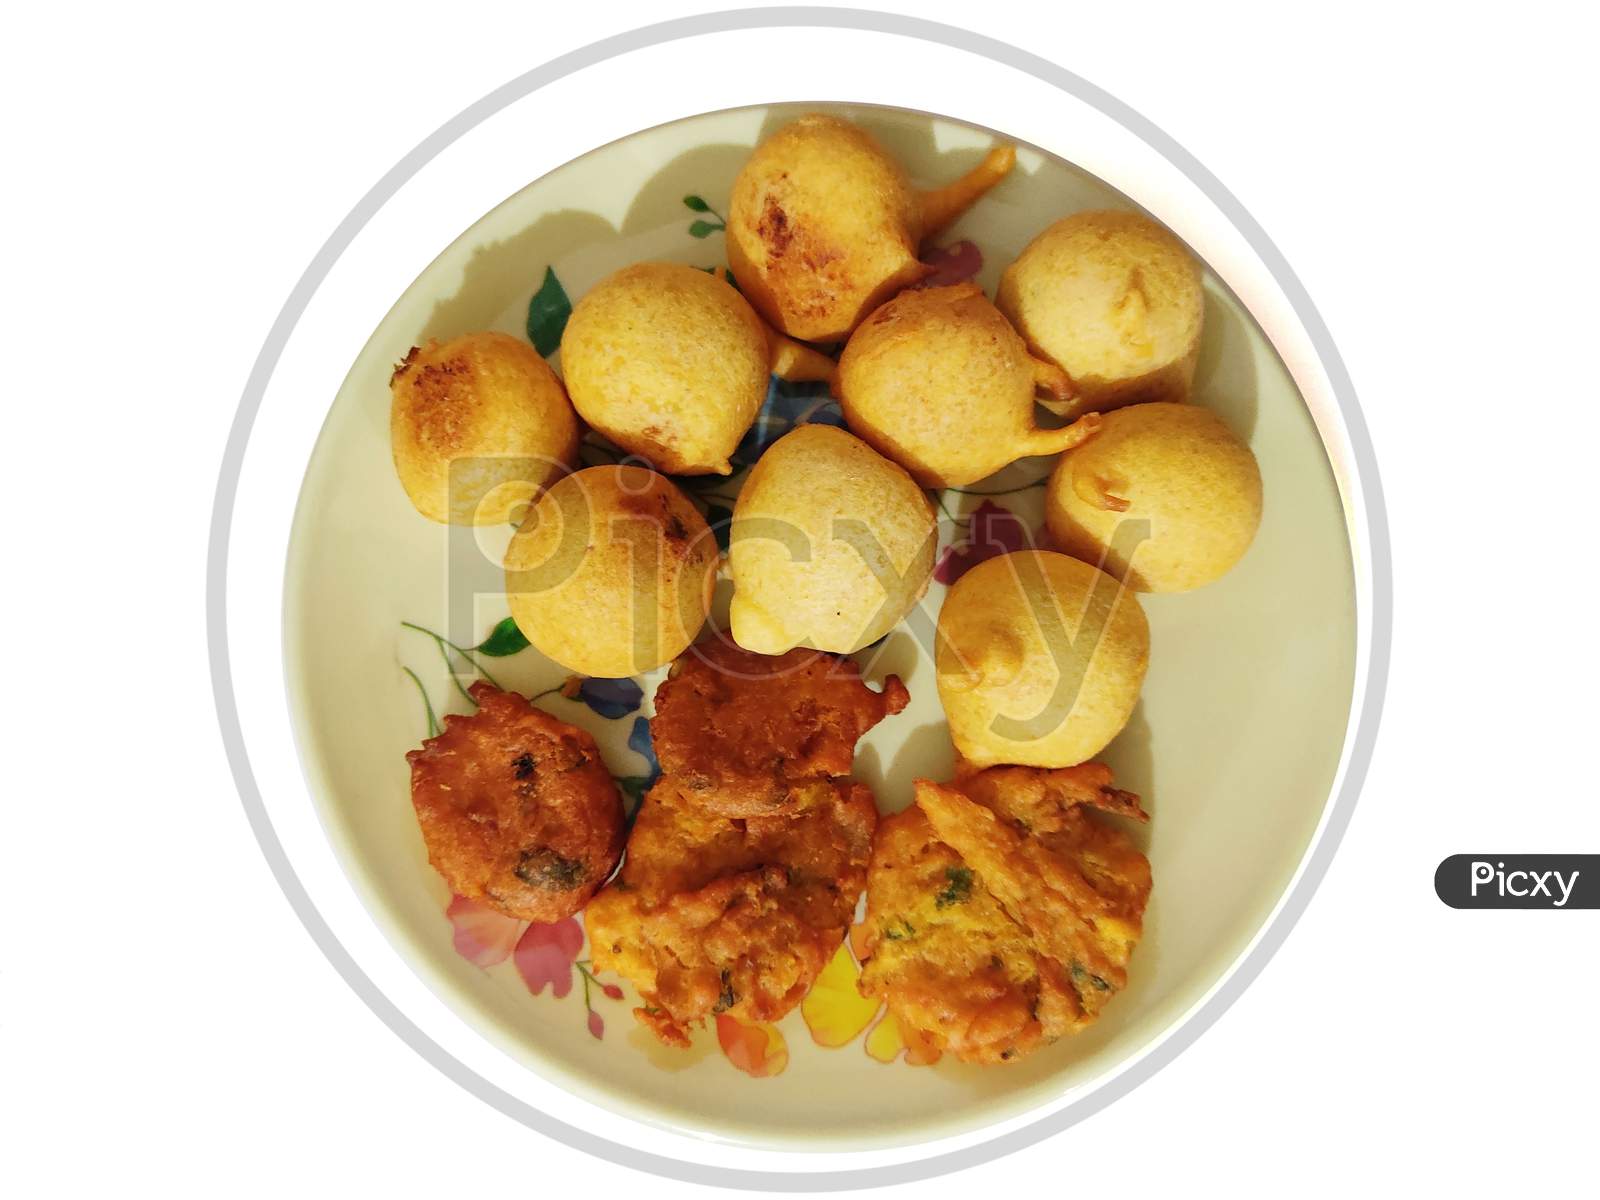 Indian Favourite Street Fried Food Pakora Also Know As Pakoda, Bhajiya, Bhajia, Methi Gota, Kanda Bhaji, Pyaz Pakoda, Fried Chillies, Onion Wada, Potato Vada, Aloo Bhajji Or Fritter